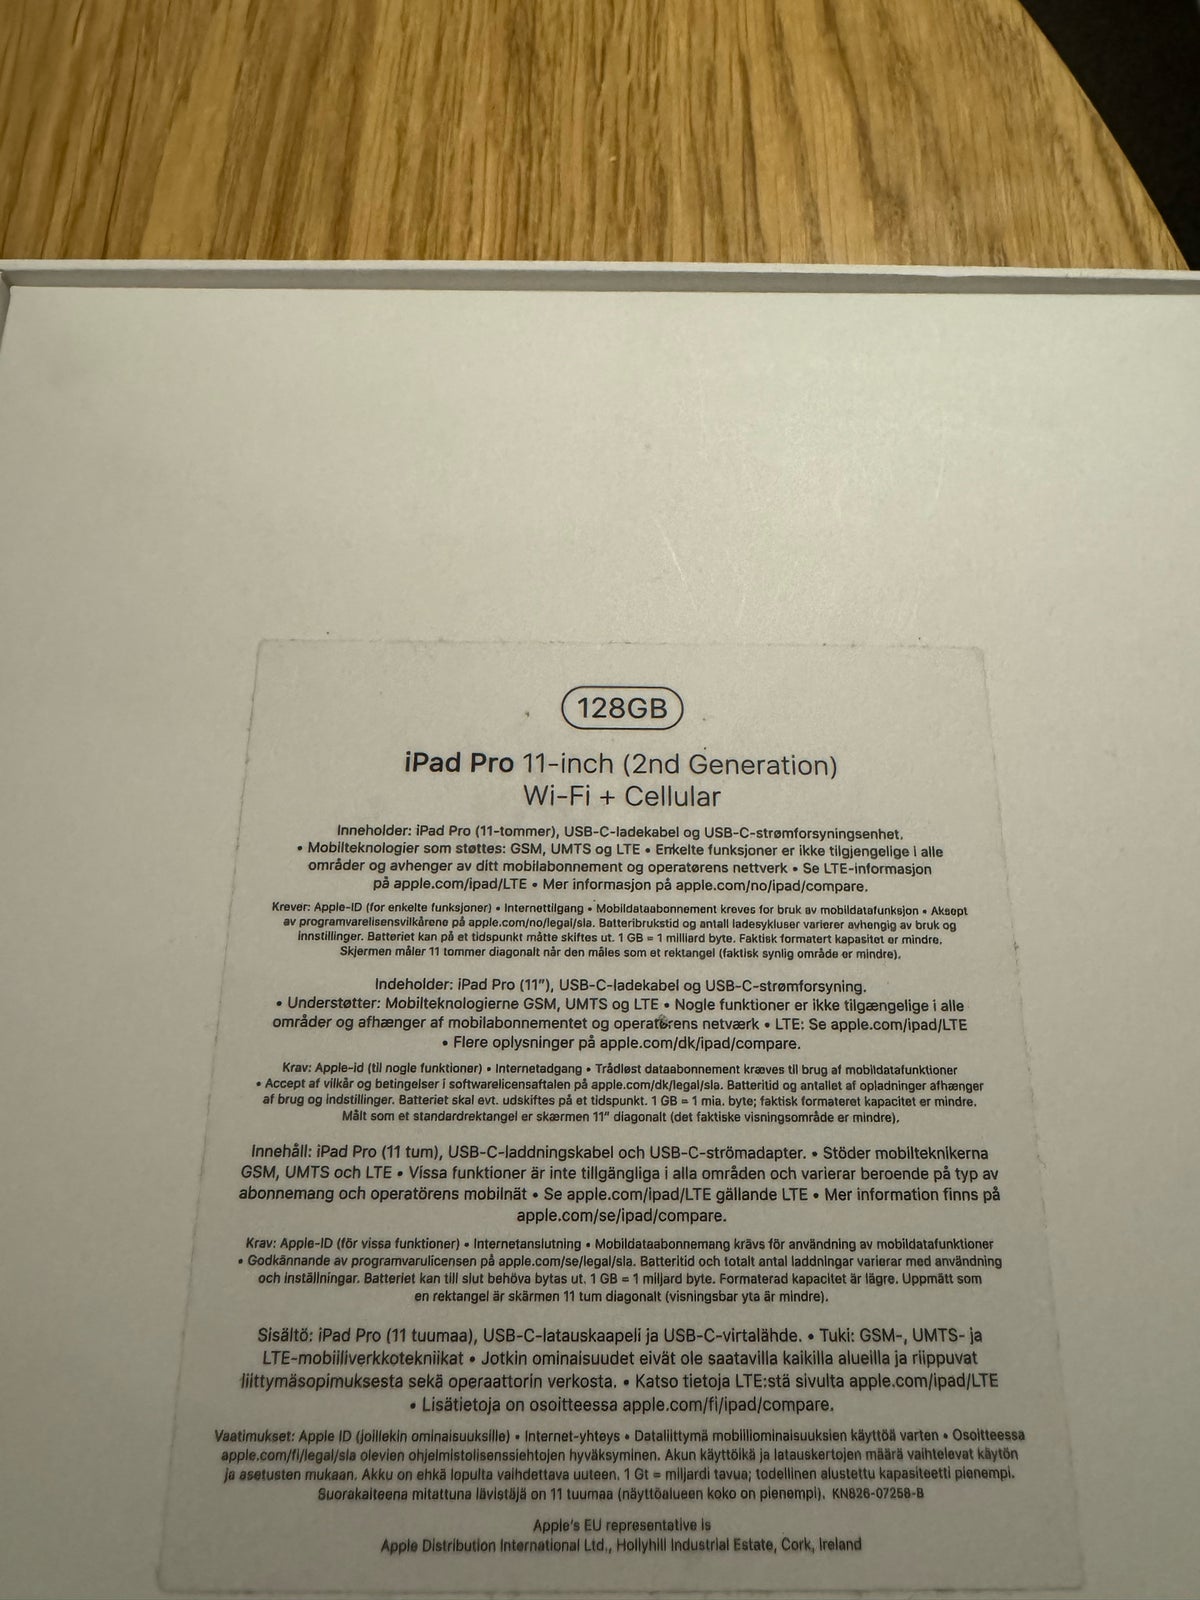 iPad Pro 2, God